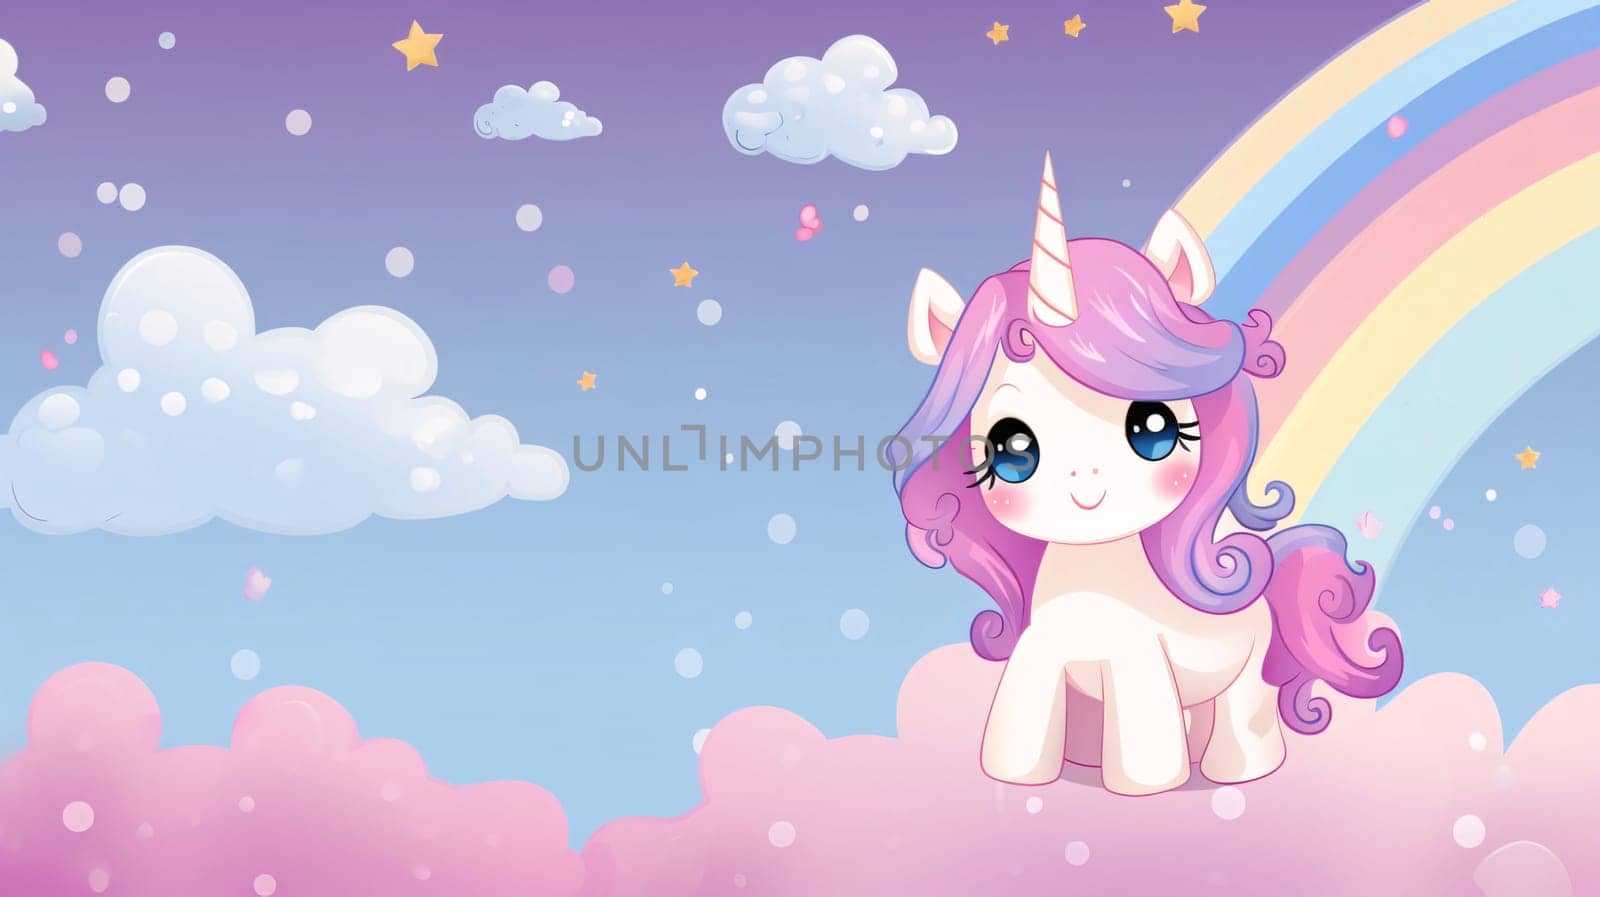 Banner: Cute unicorn with rainbow in the sky. Vector cartoon illustration.